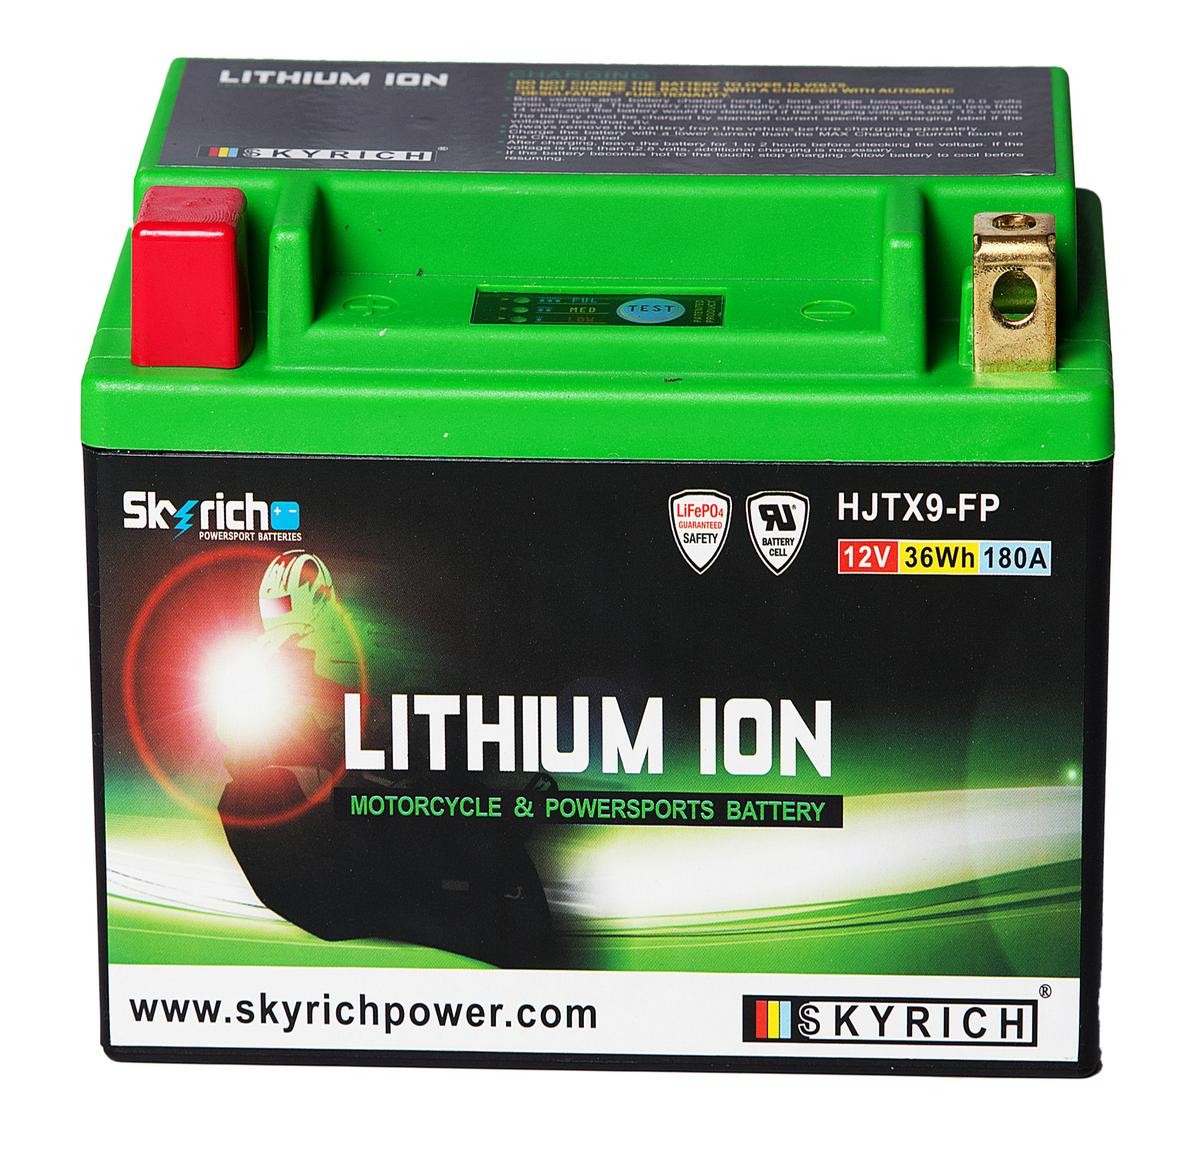 TRIUMPH SPEED Batterie 12V 3Ah 180A N Li-Ionen-Batterie SKYRICH LITHIUM ION HJTX9-FP